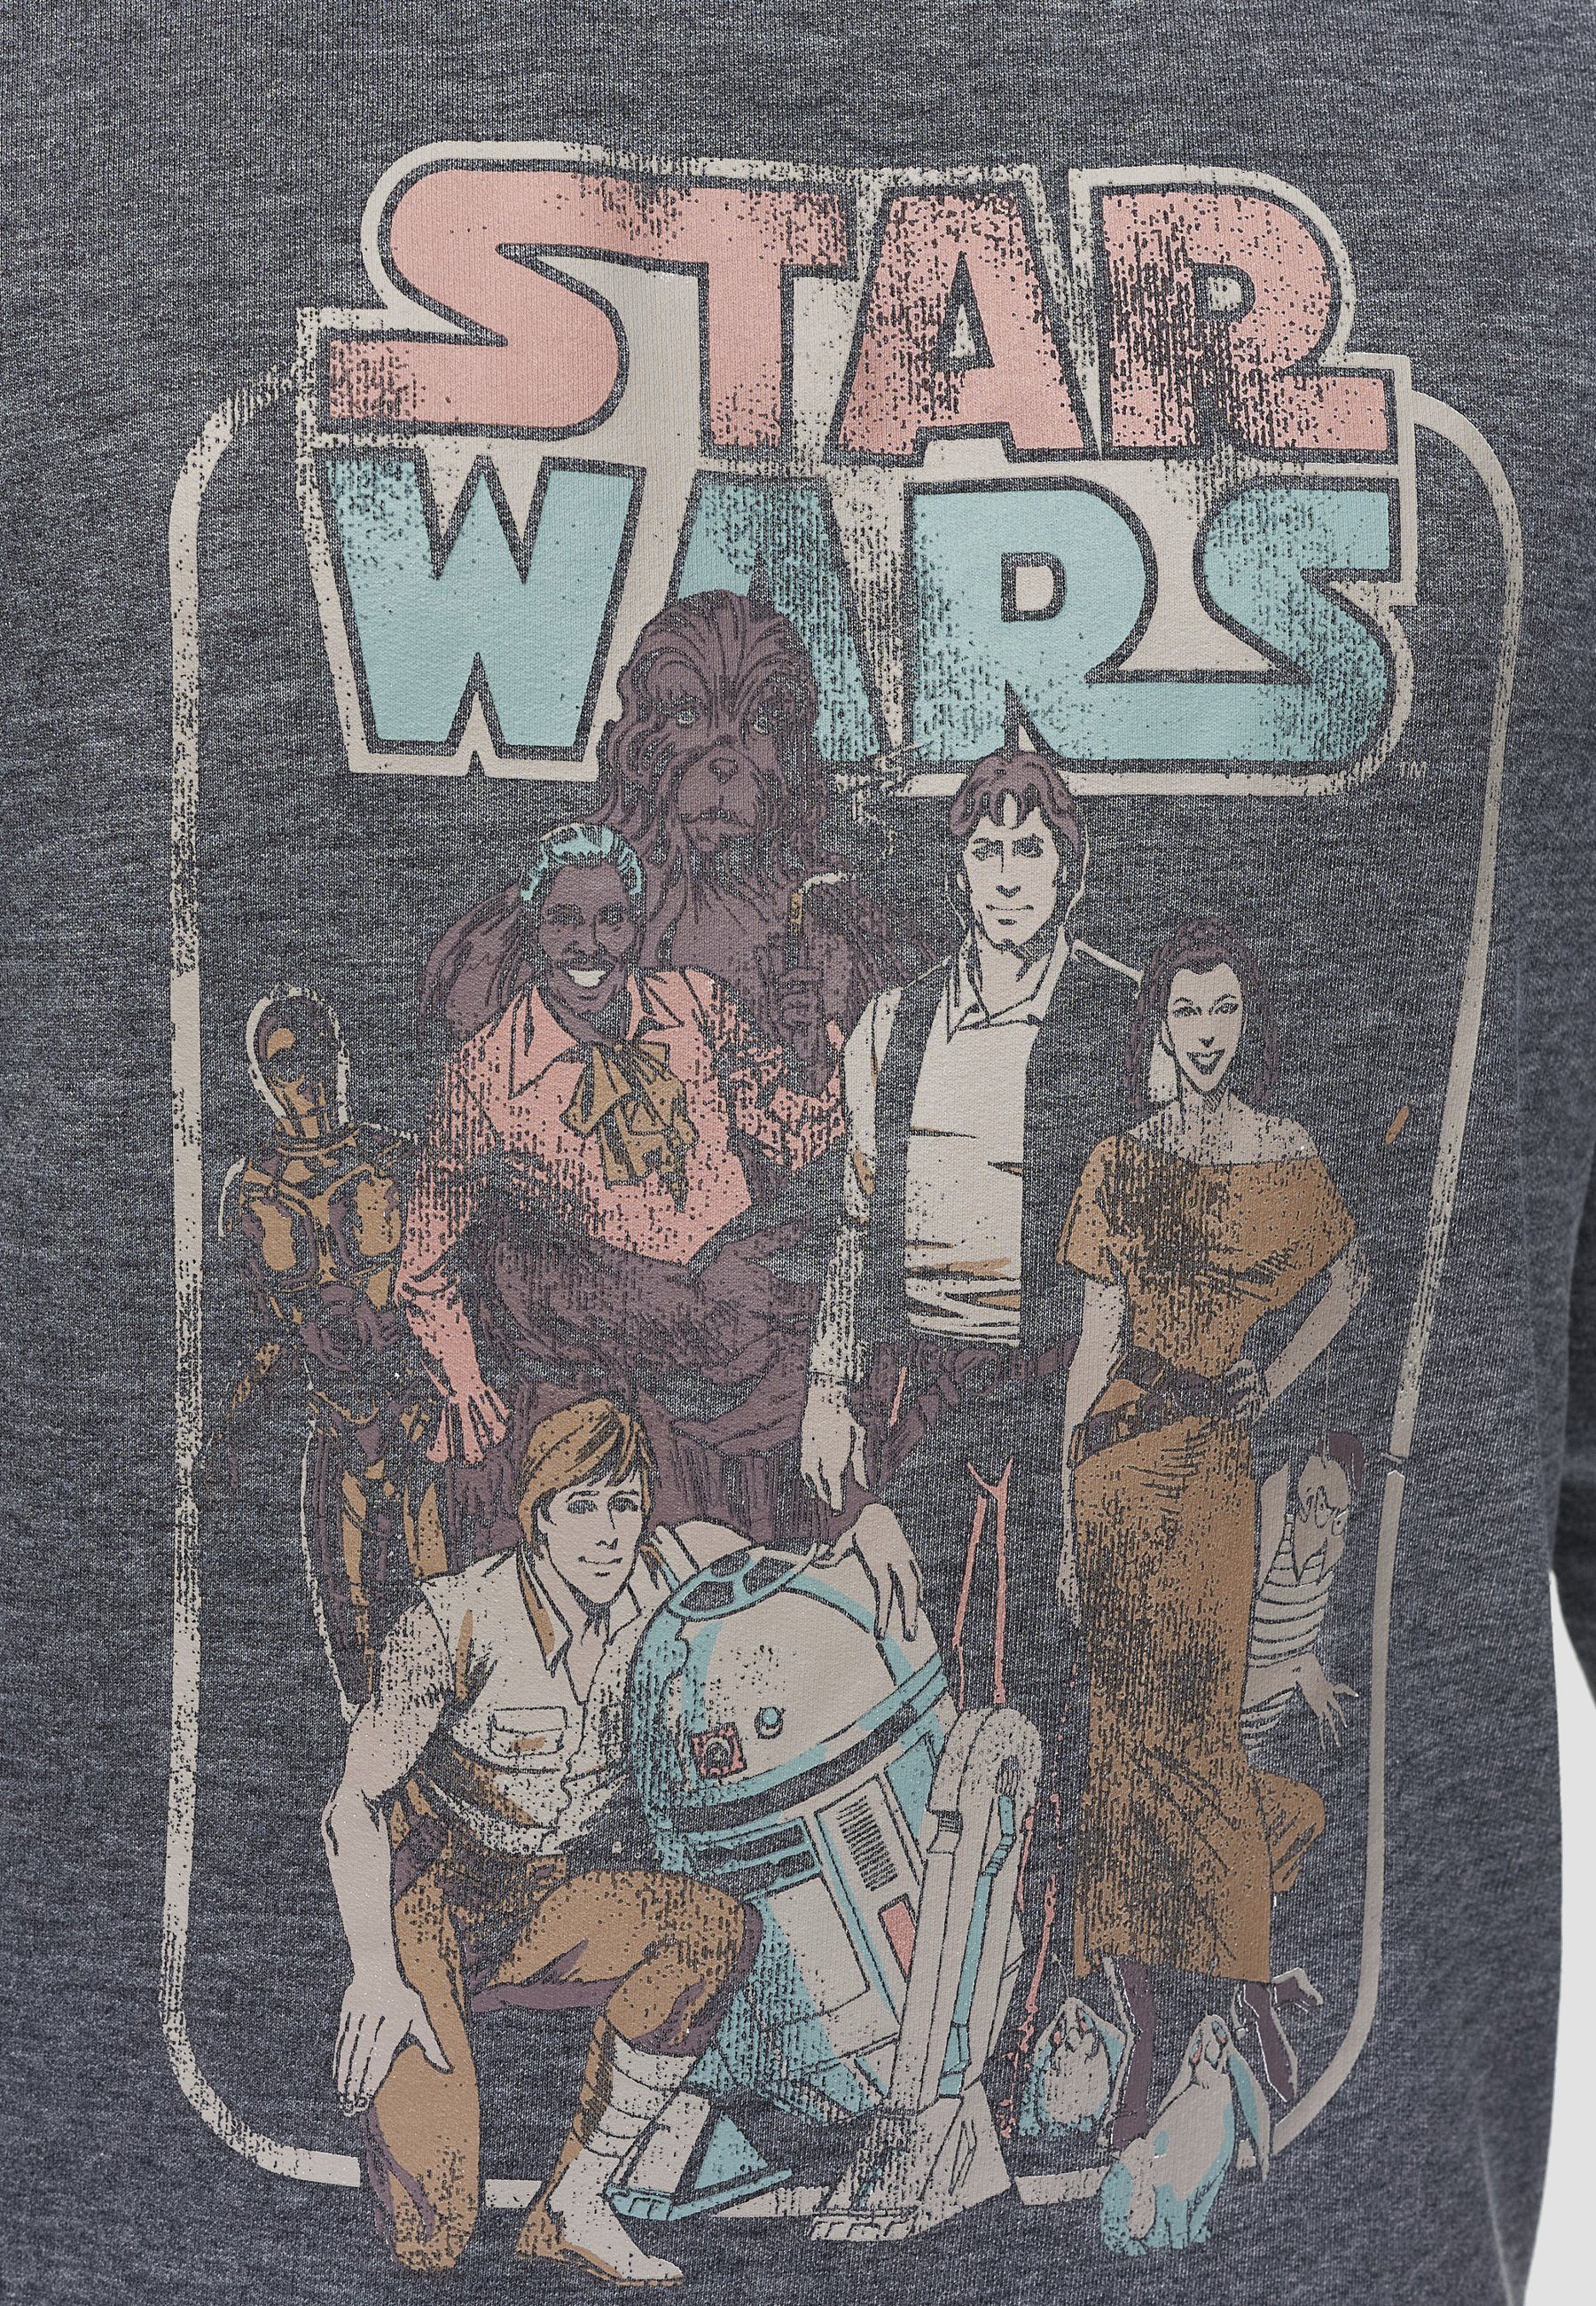 Recovered Sweatshirt Star Wars zertifizierte Return Group The Bio-Baumwolle GOTS Comic Of Jedi Vintage